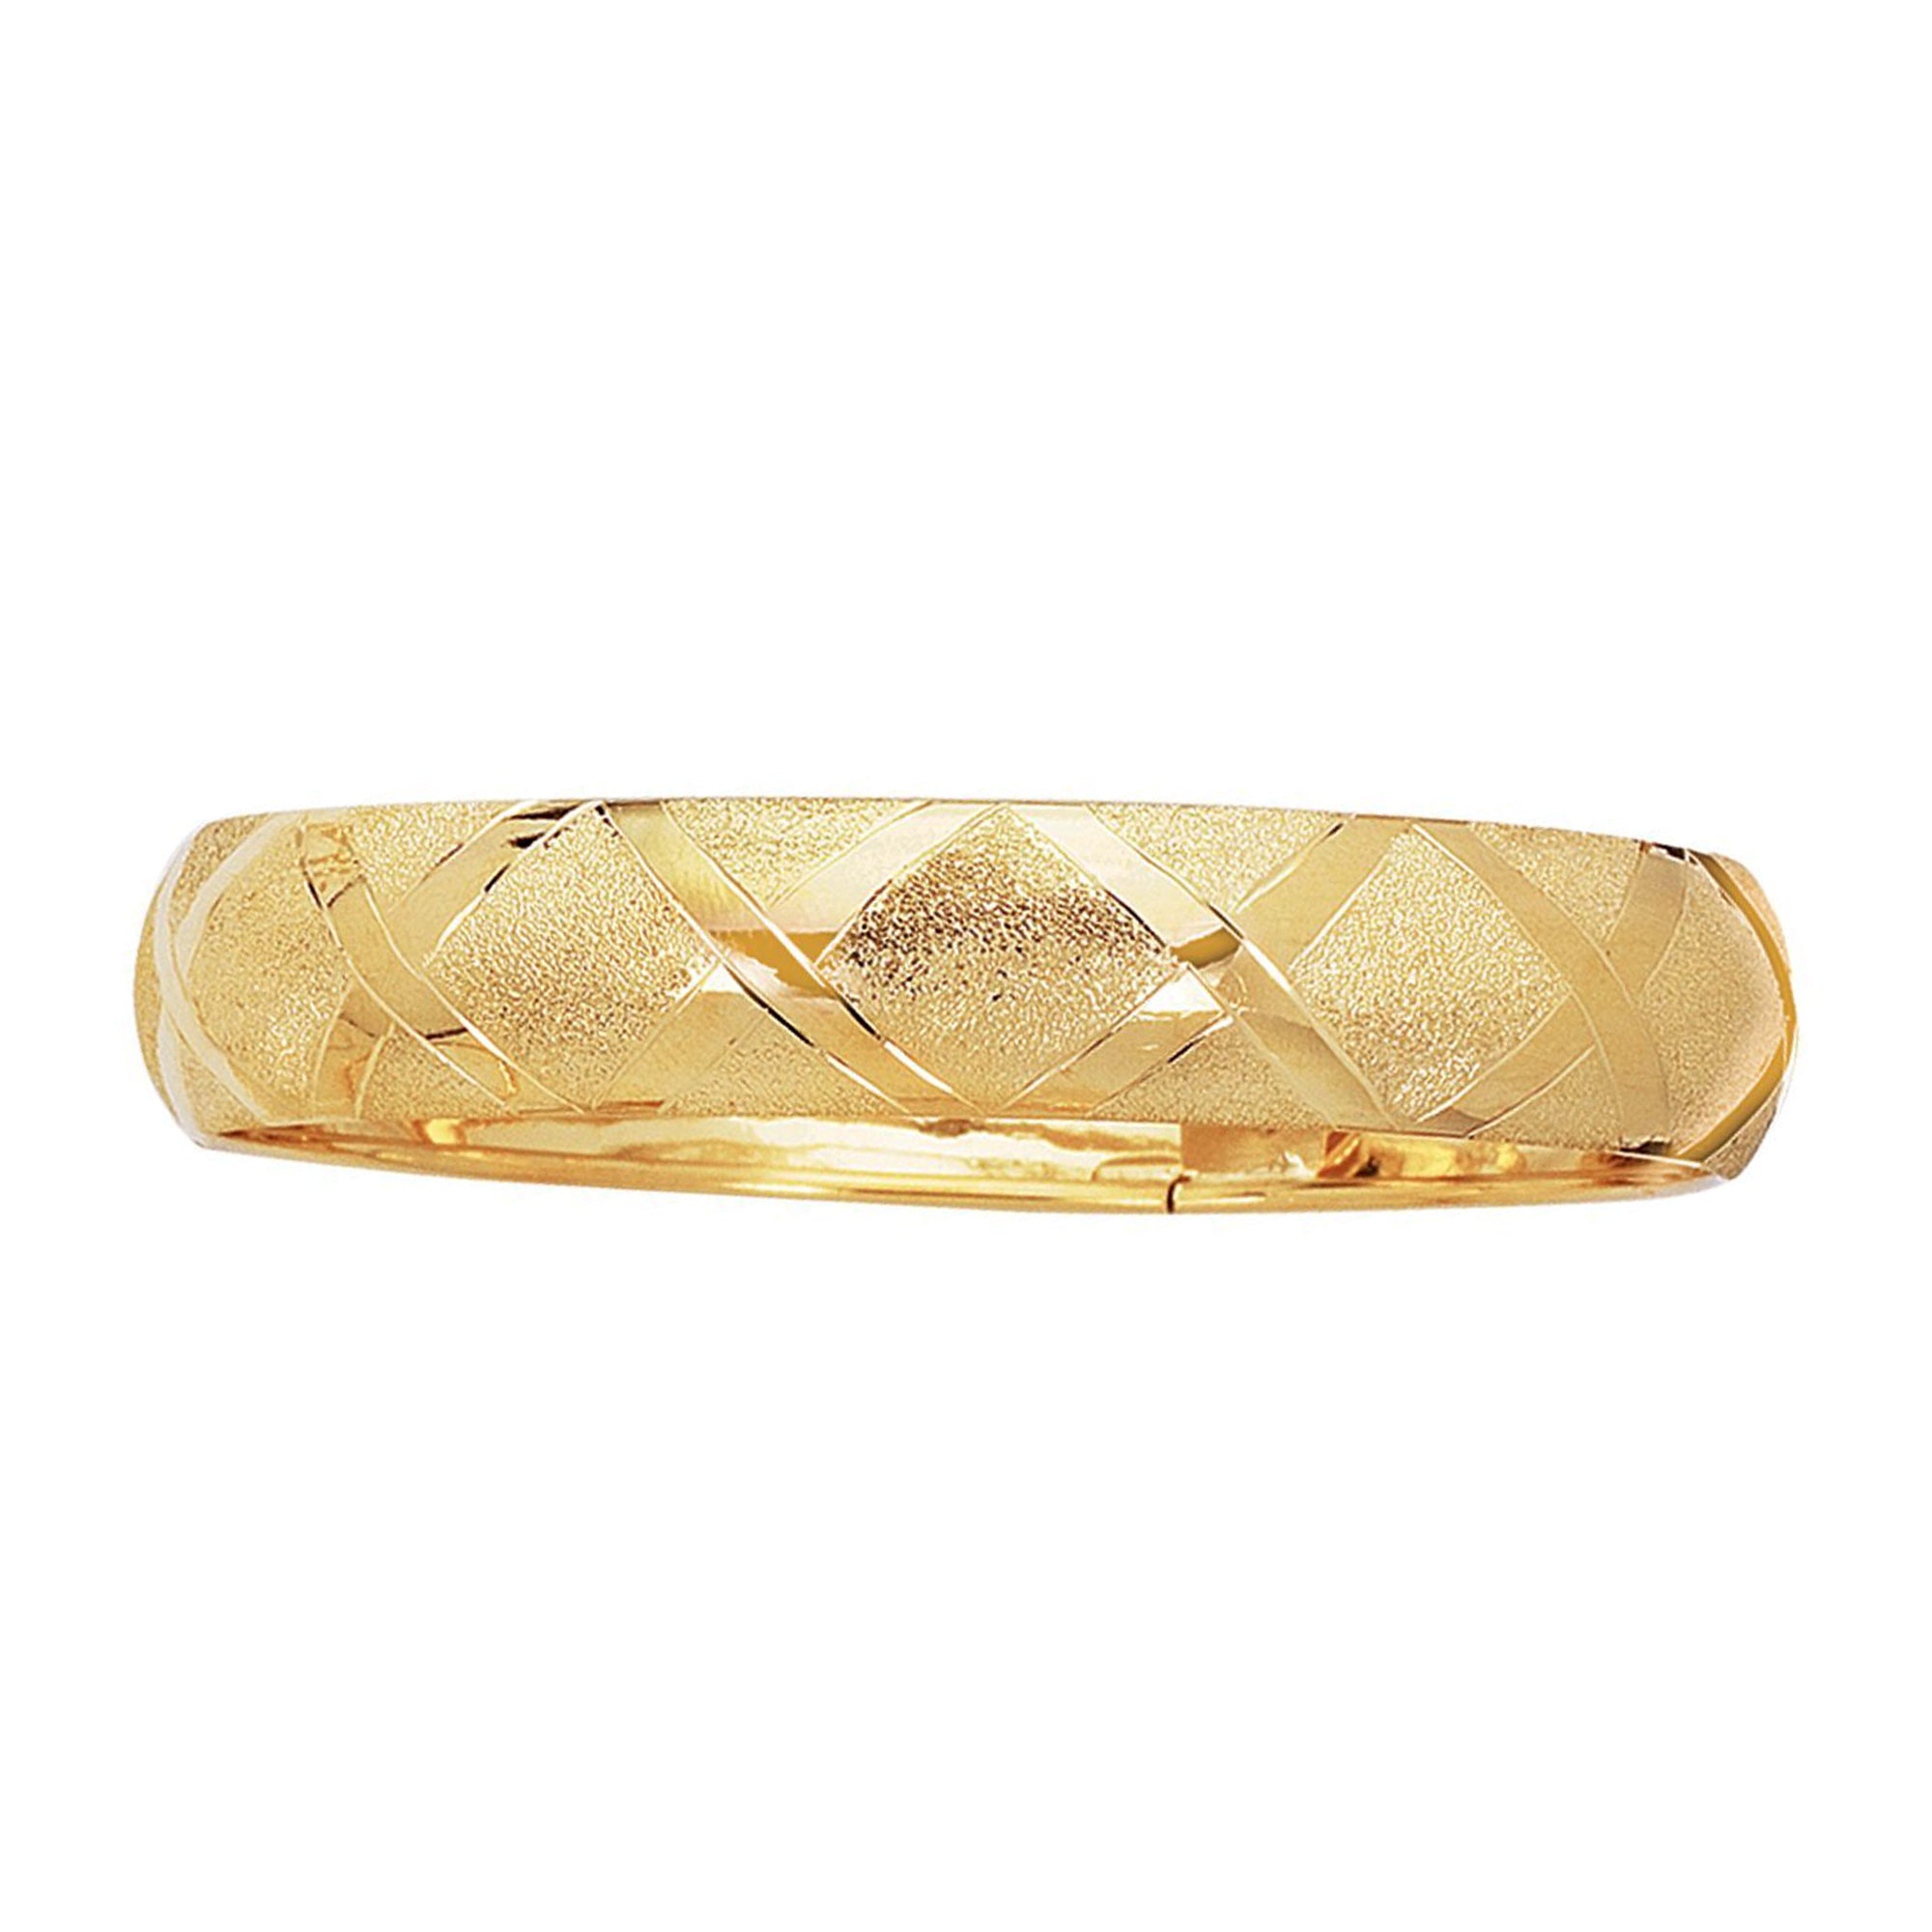 10k Yellow Gold High Polished Flex And Diamond Pattern Bangle Bracelet, 7" fine designer jewelry for men and women